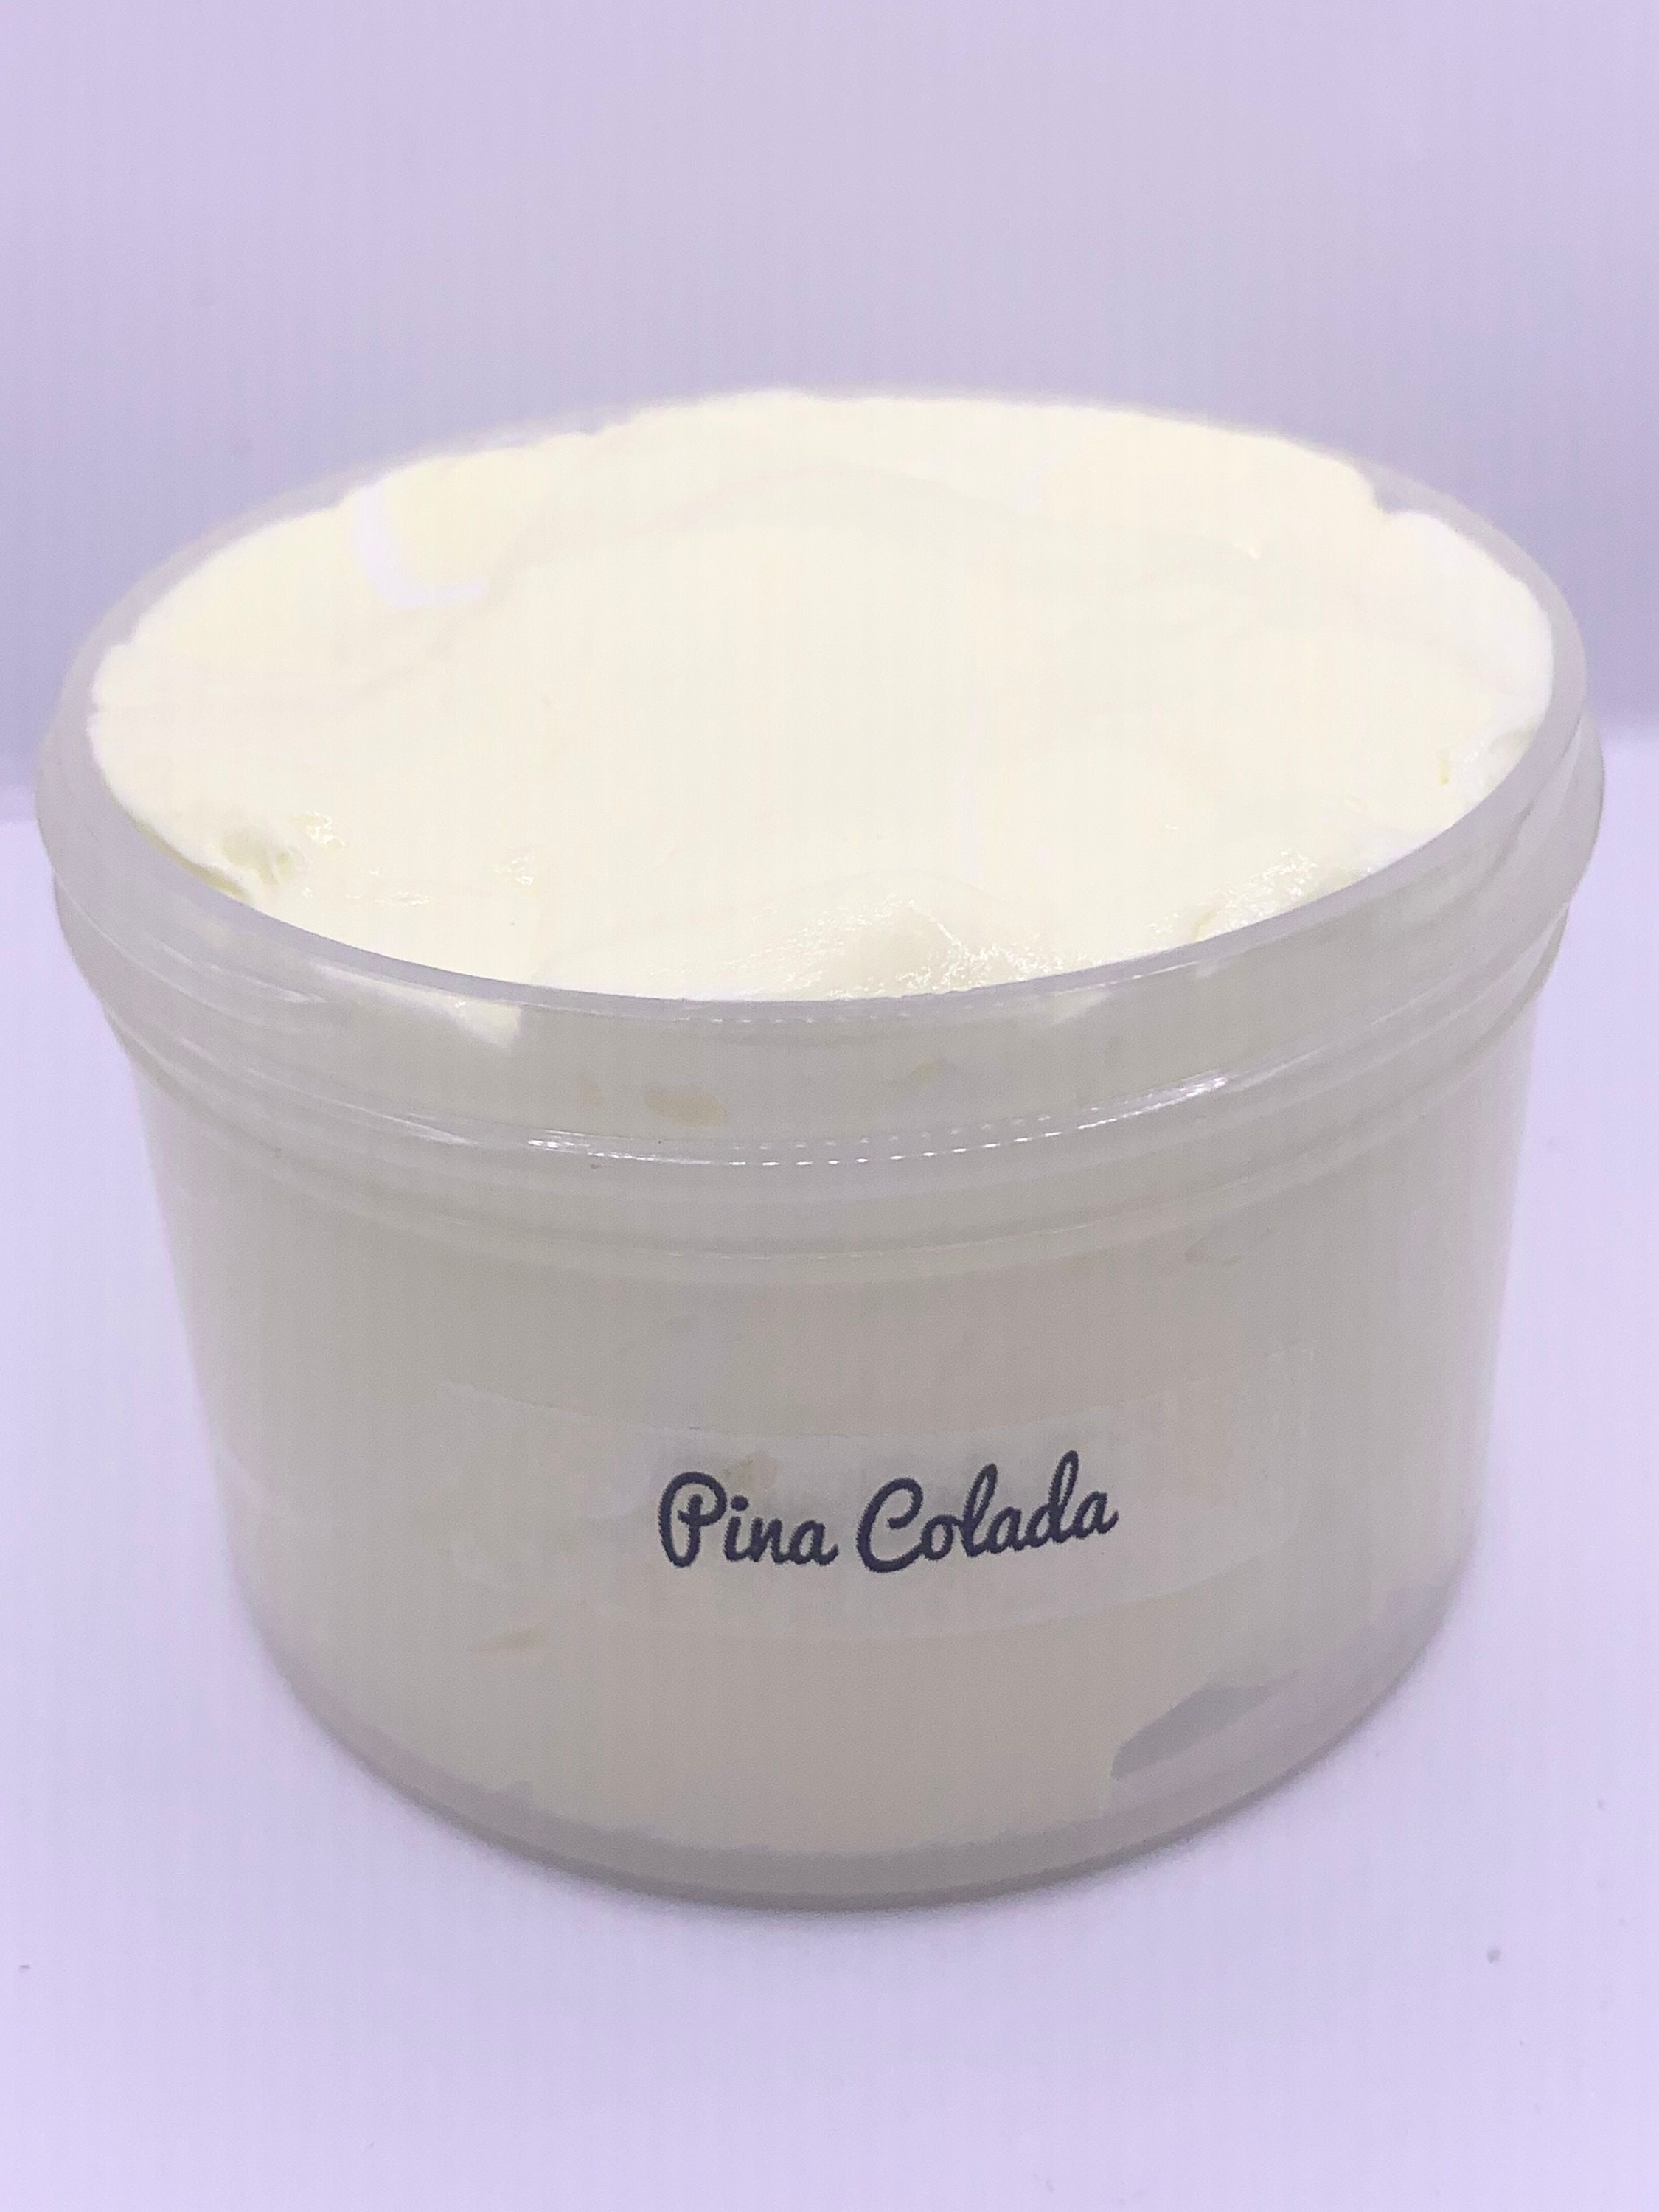 Piña colada- white butter slime